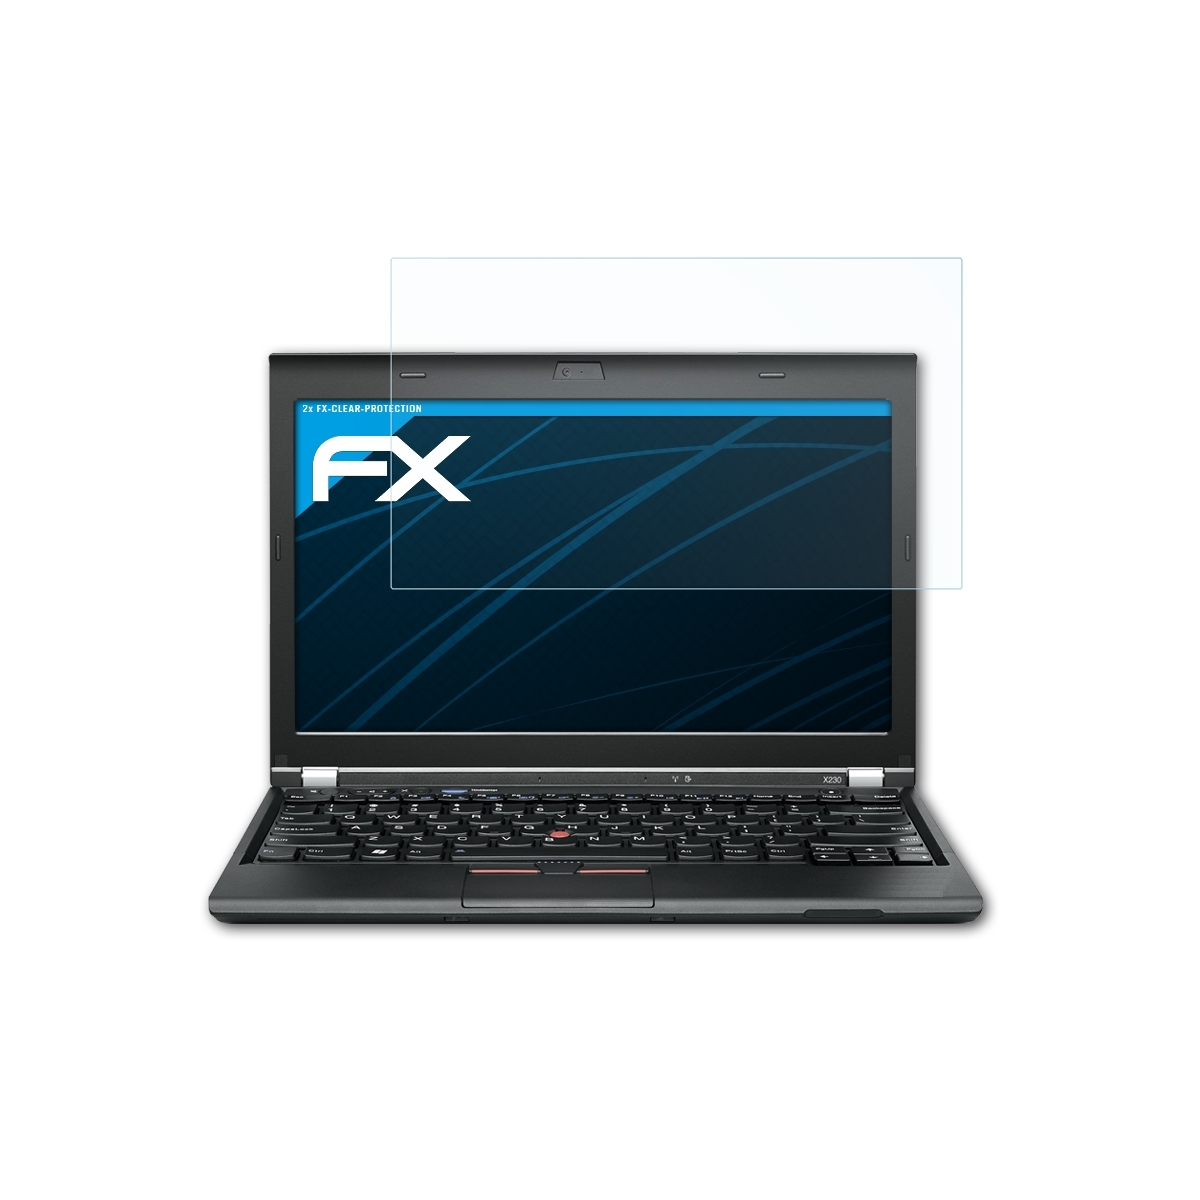 FX-Clear ATFOLIX Lenovo 2x X230t) Displayschutz(für ThinkPad